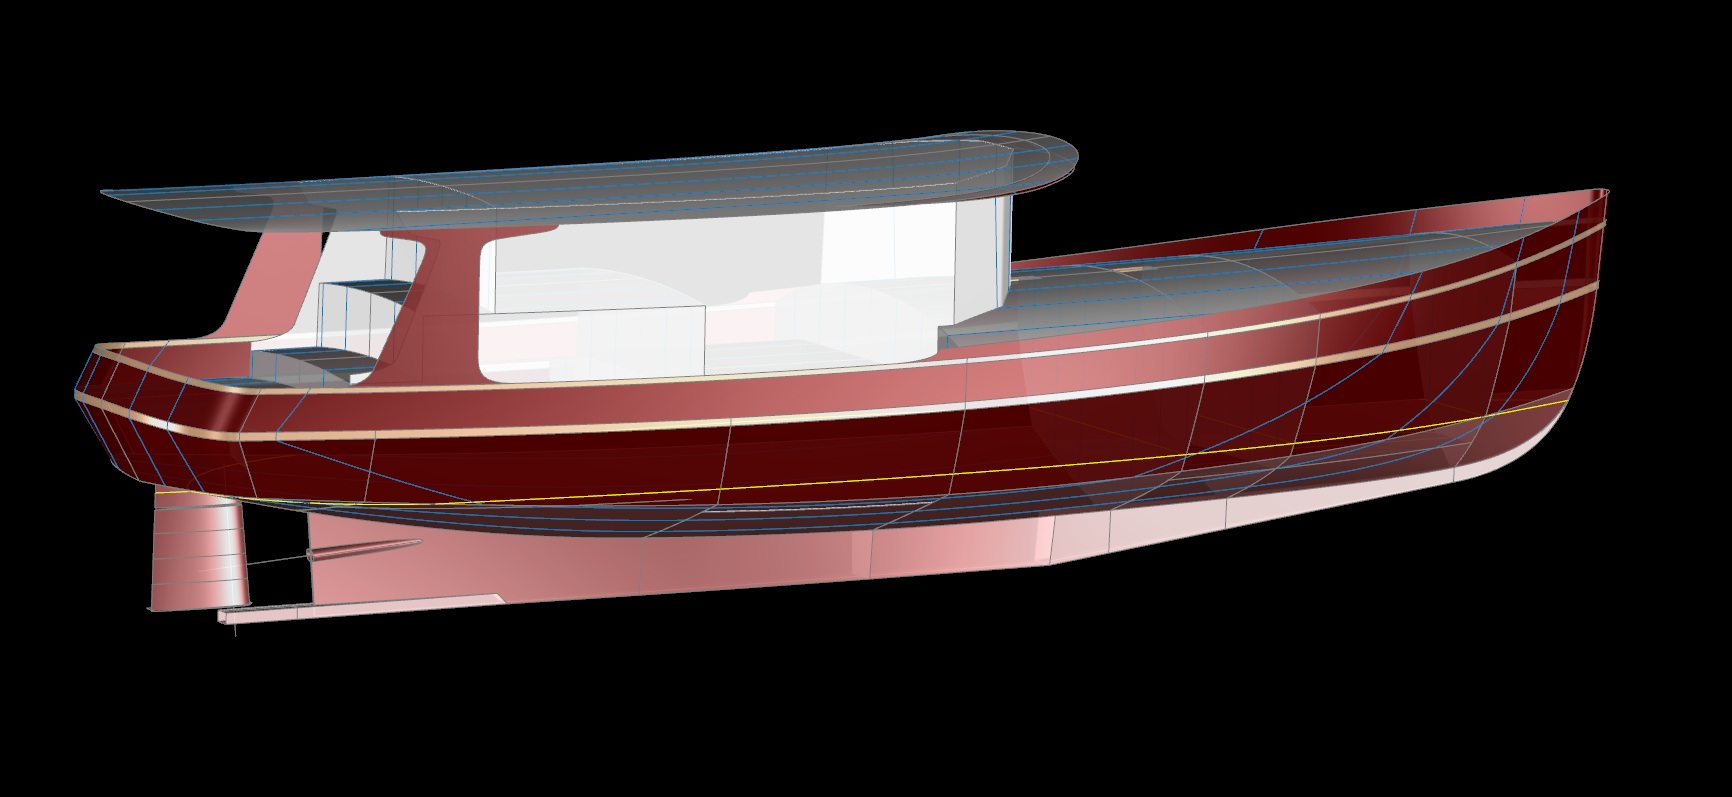 70' Valemar Trawler Yacht - Kasten Marine Design, Inc.